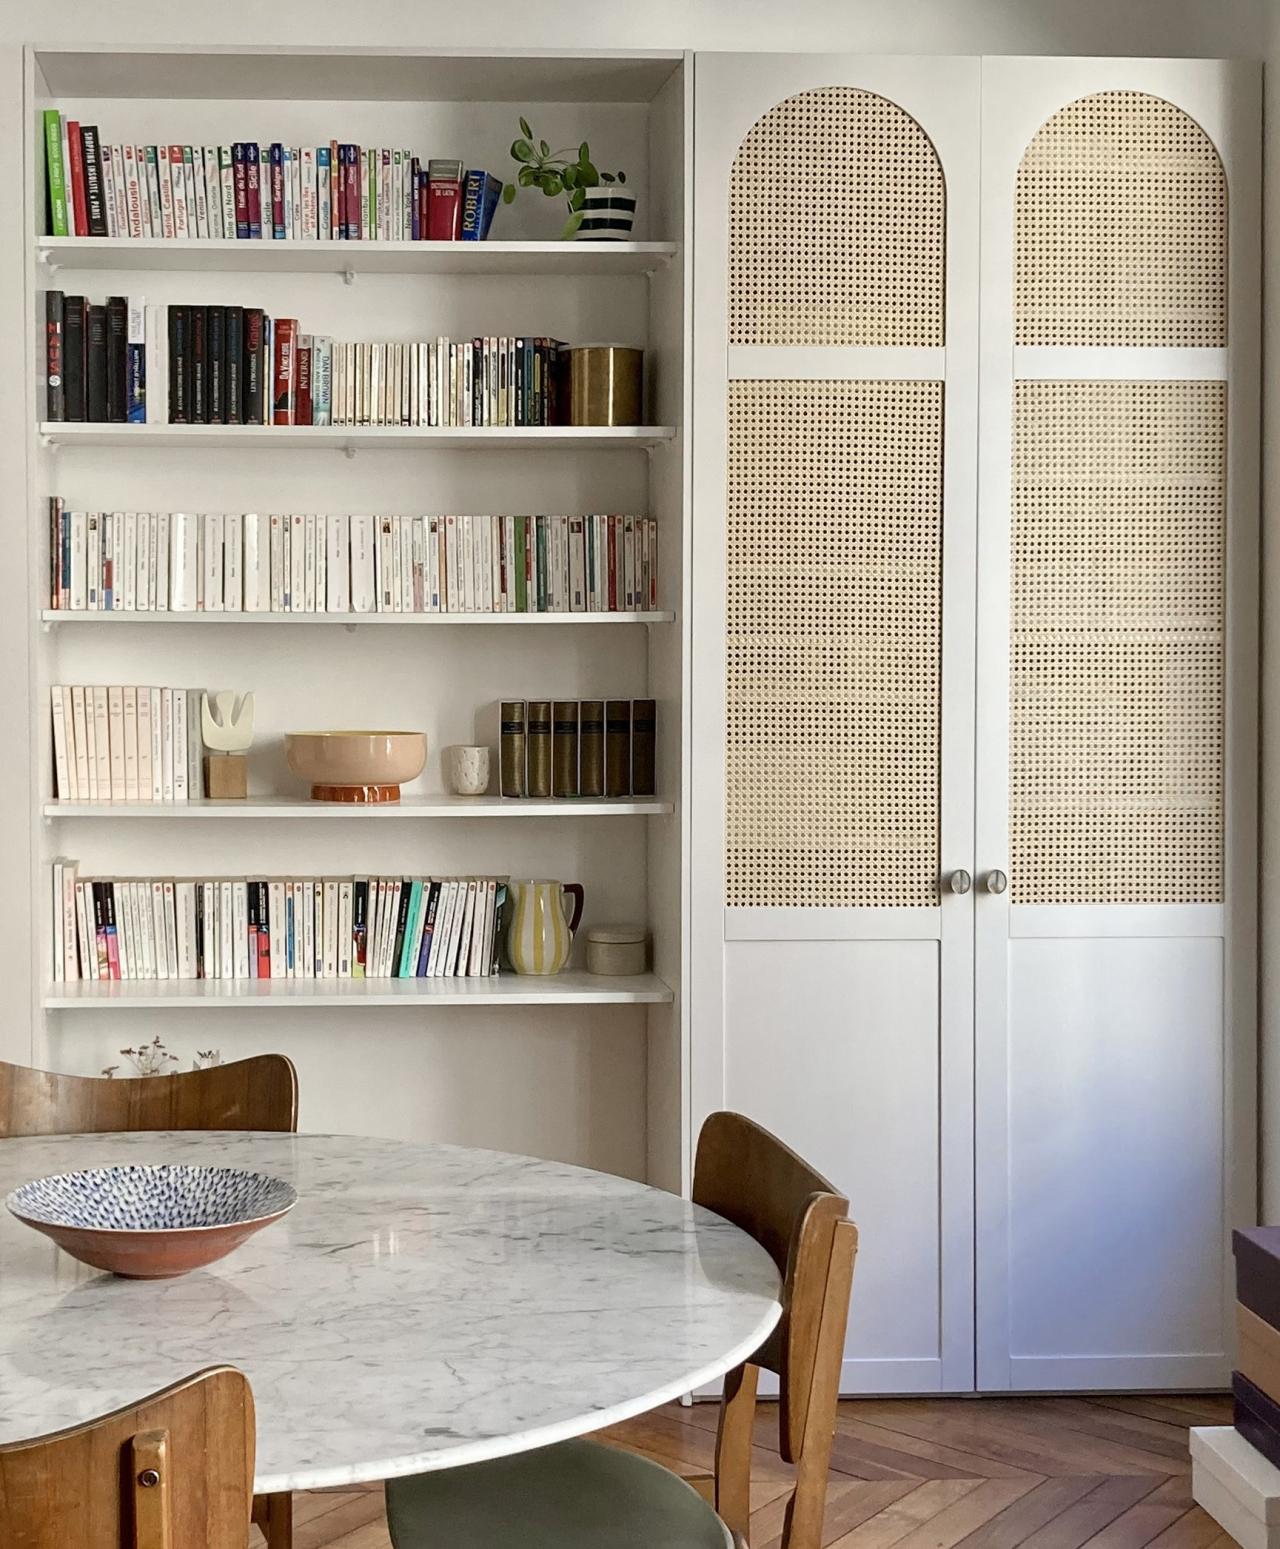 Aurélie's Blanc pur wardrobe-bookcase